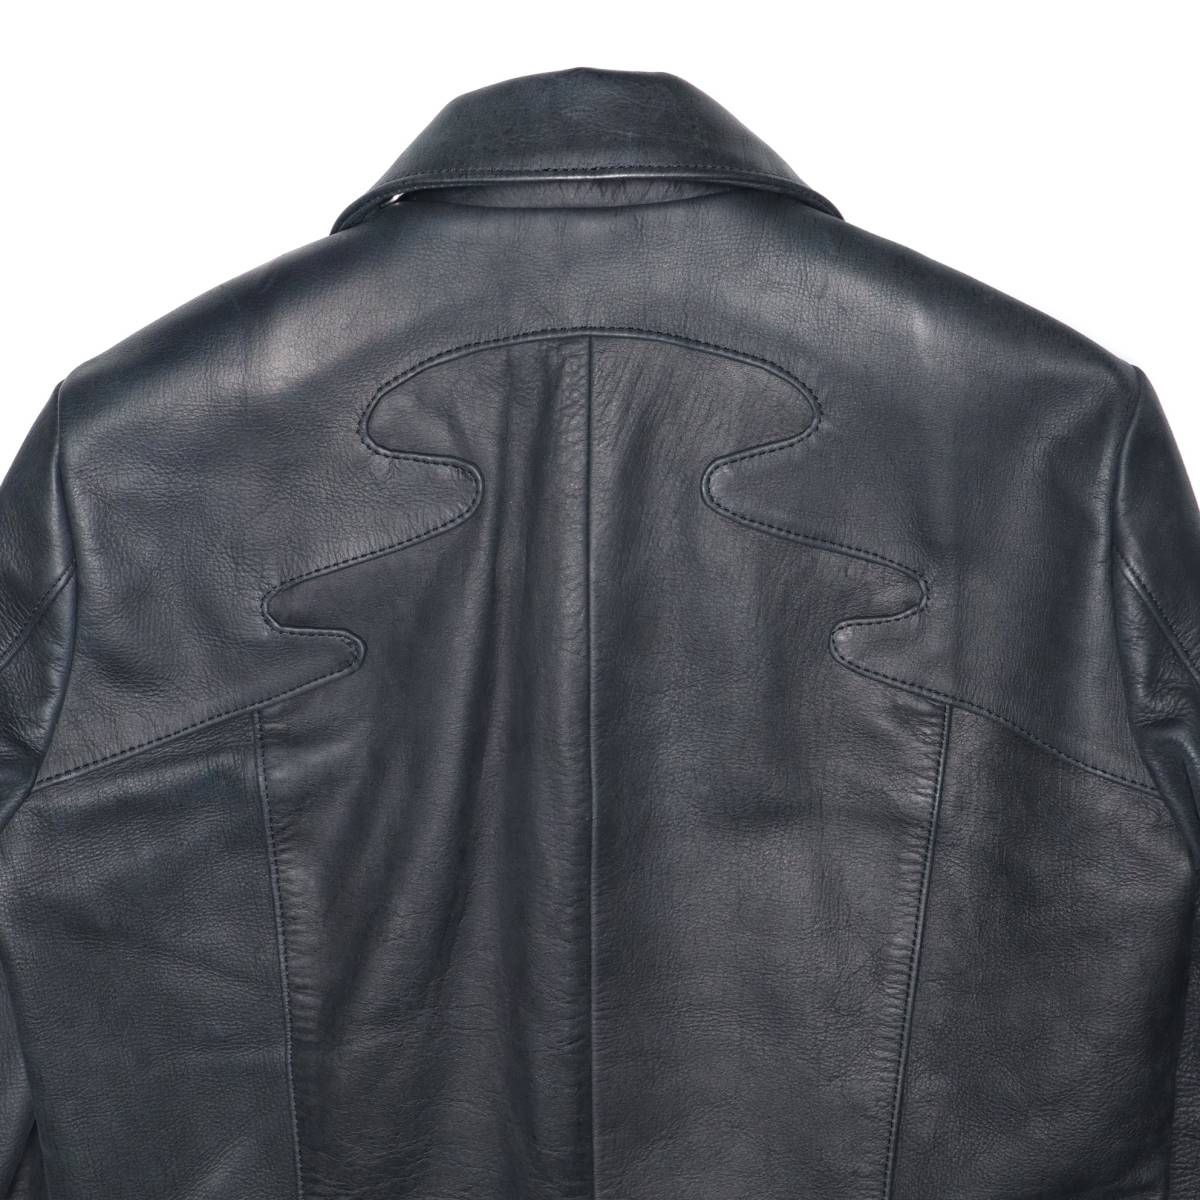 Pledge East ue strain leather jacket 46 Single Rider's kau hyde n back oil do leather cow leather origin Number Nine 